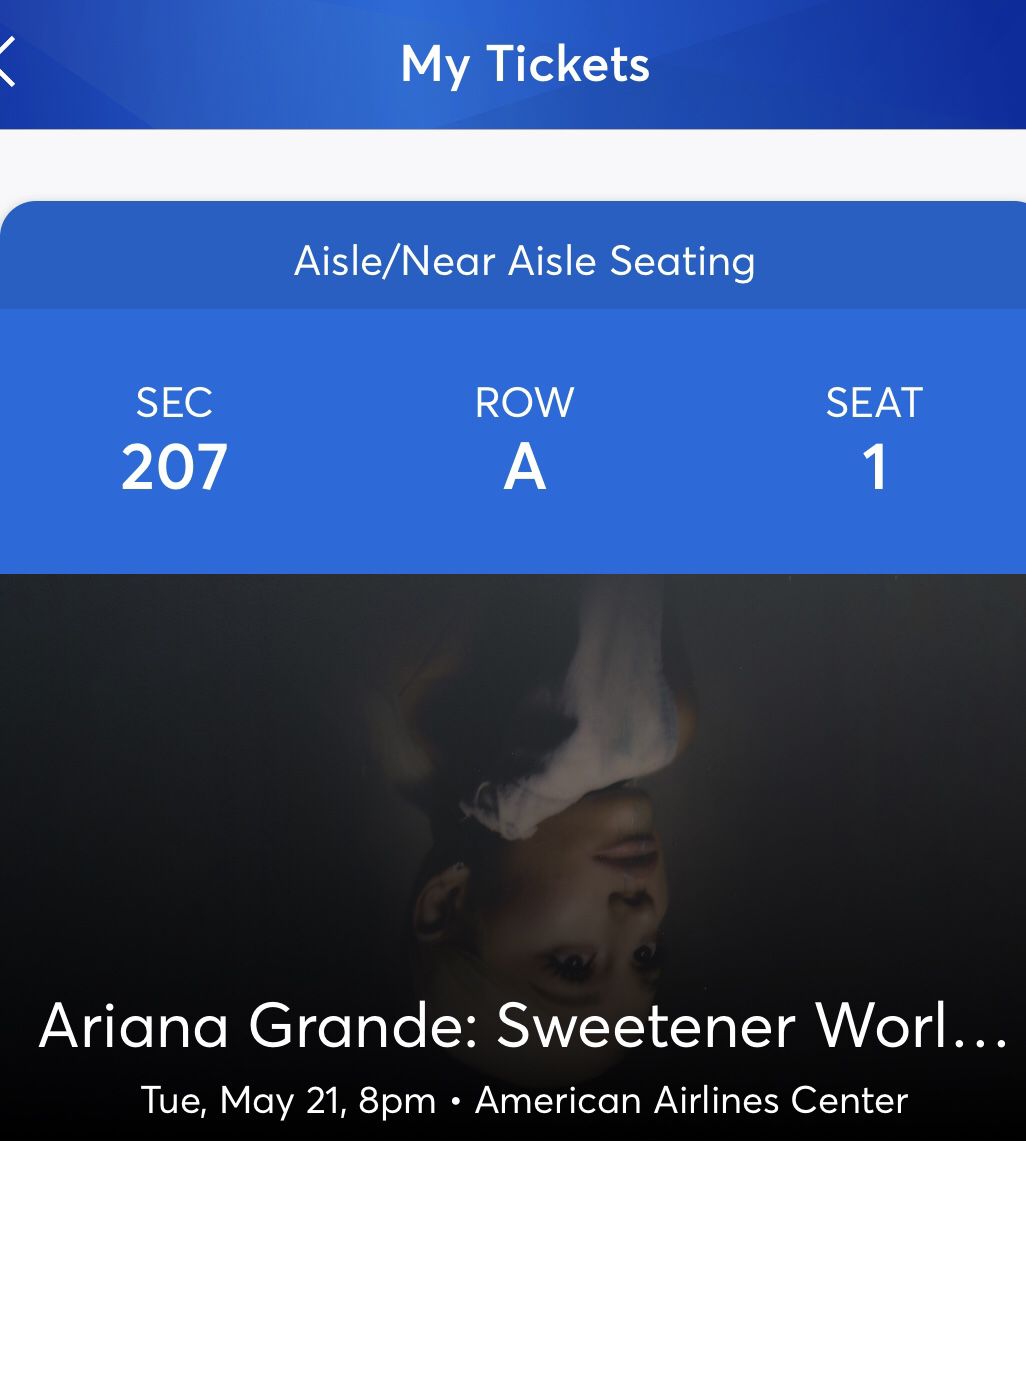 Ariana grande 2 tickets